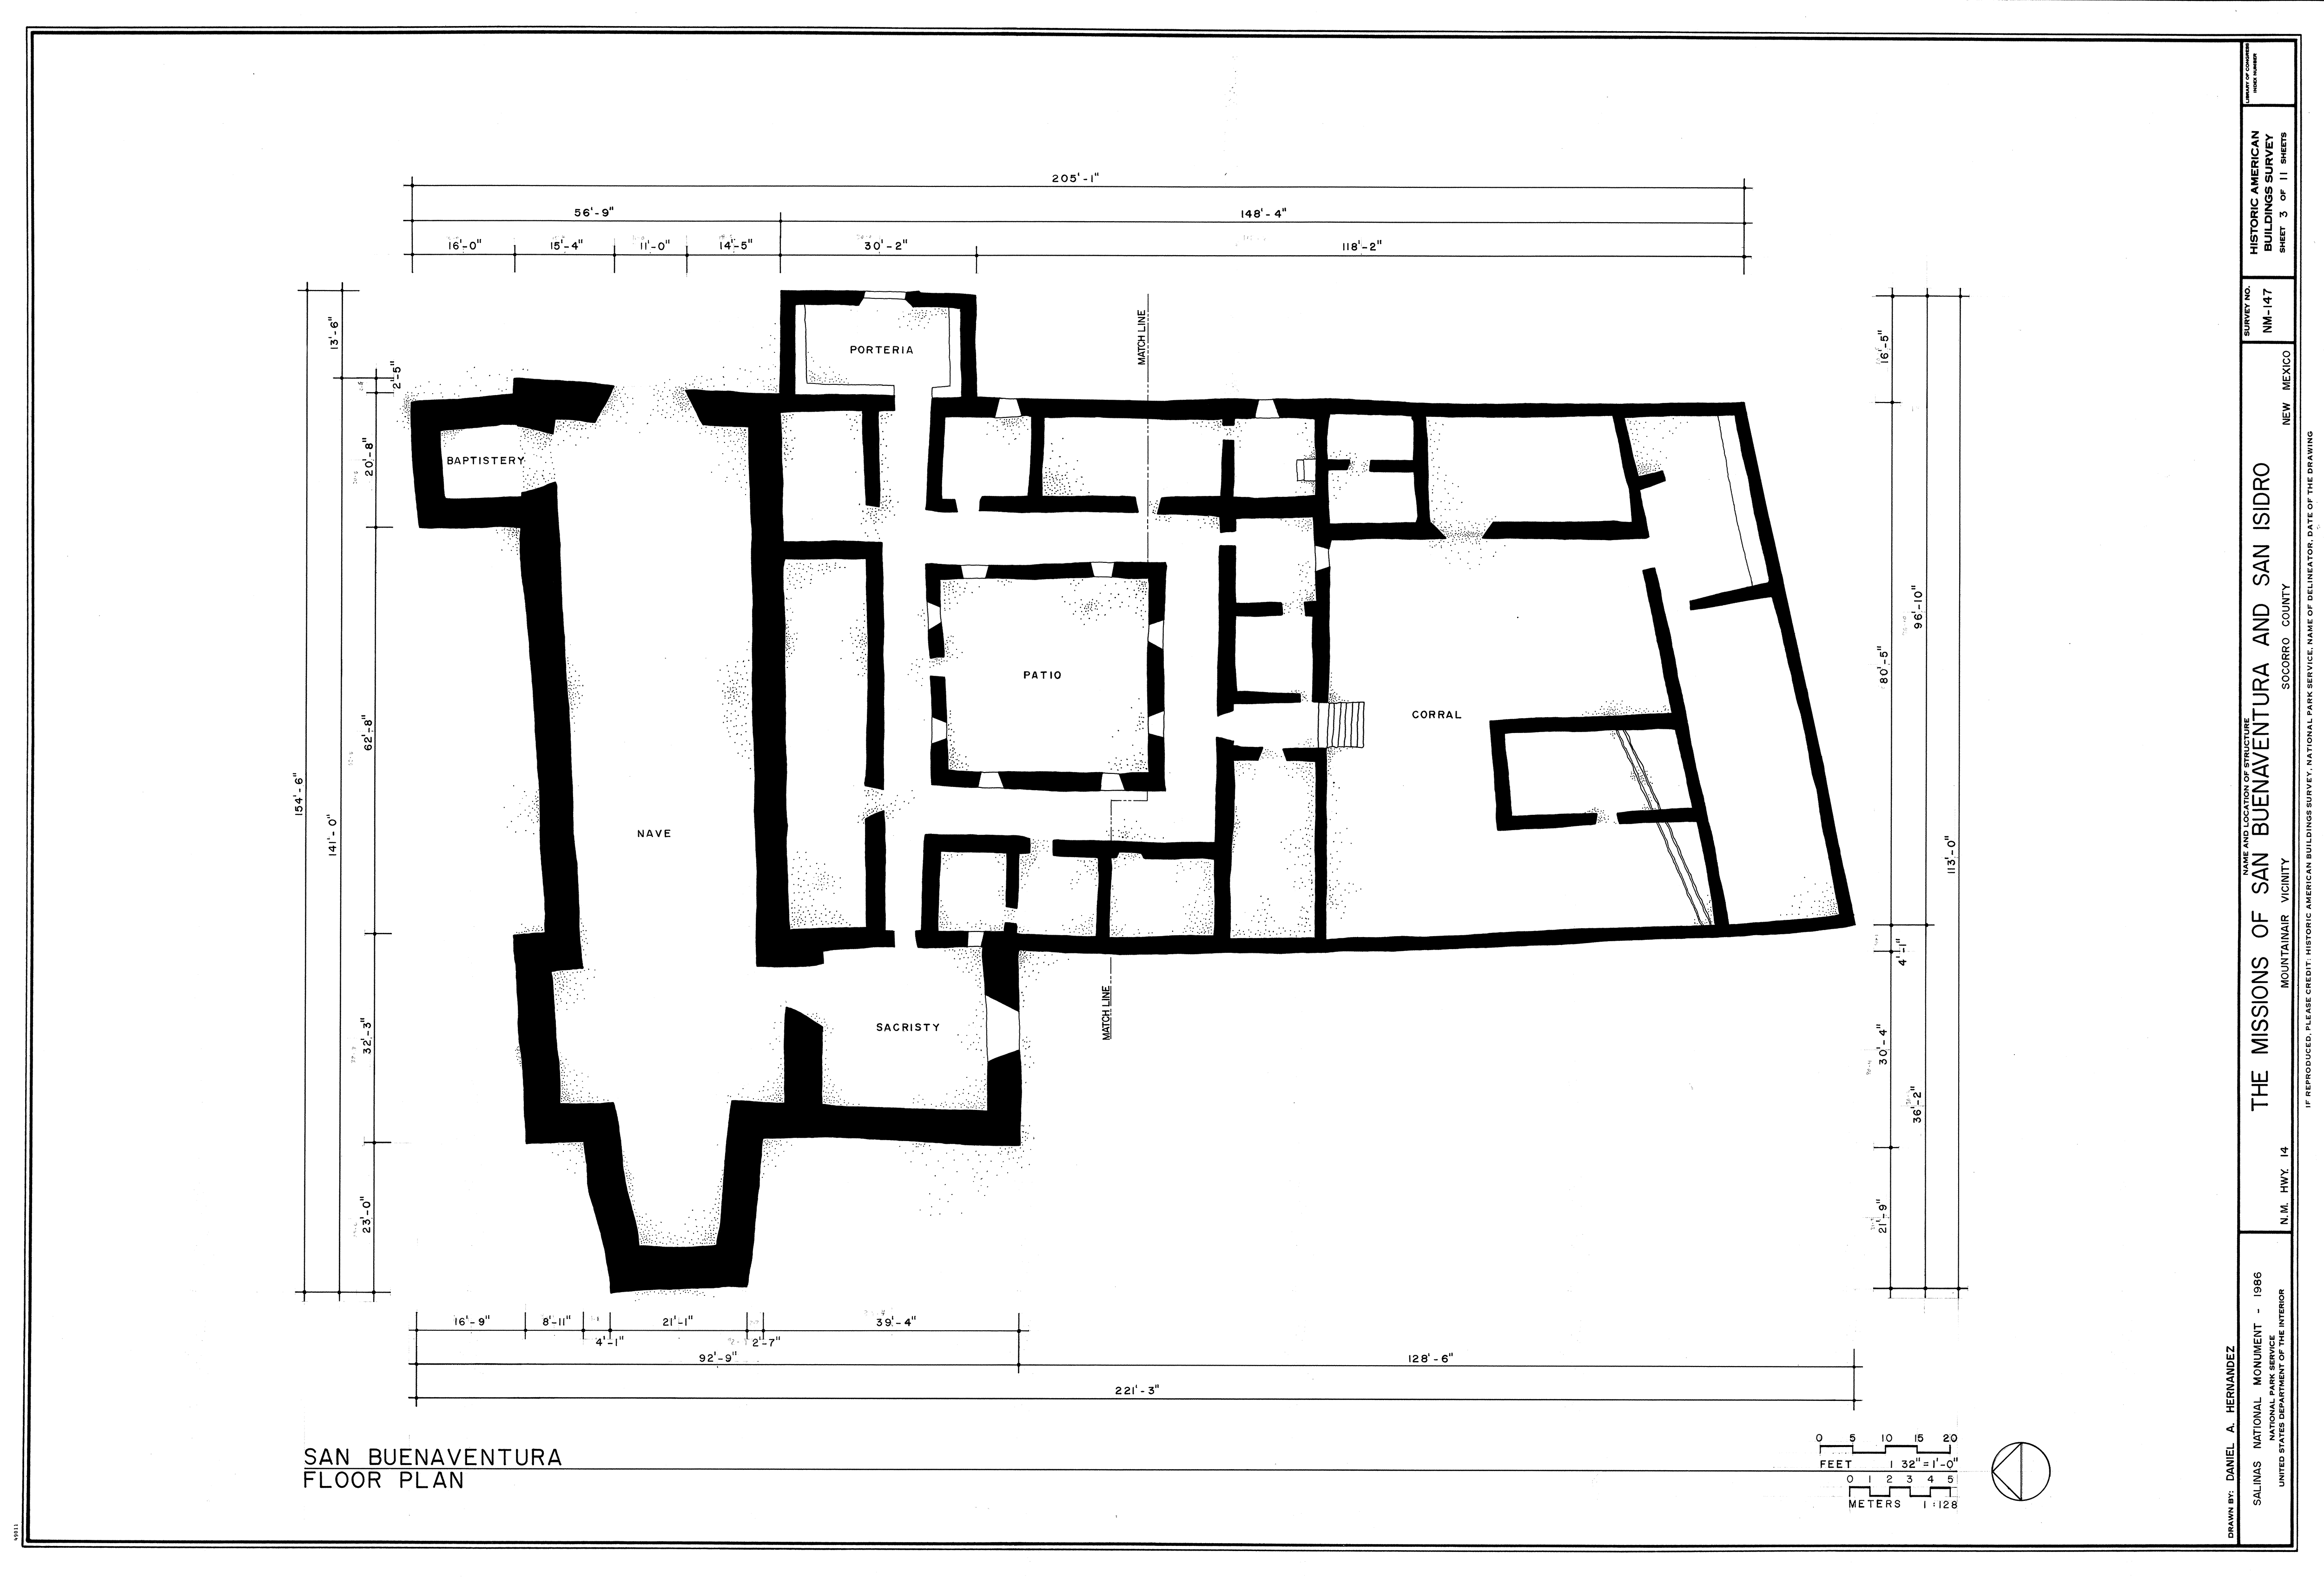 Floor Plan of San Buenaventura ClipPix ETC Educational